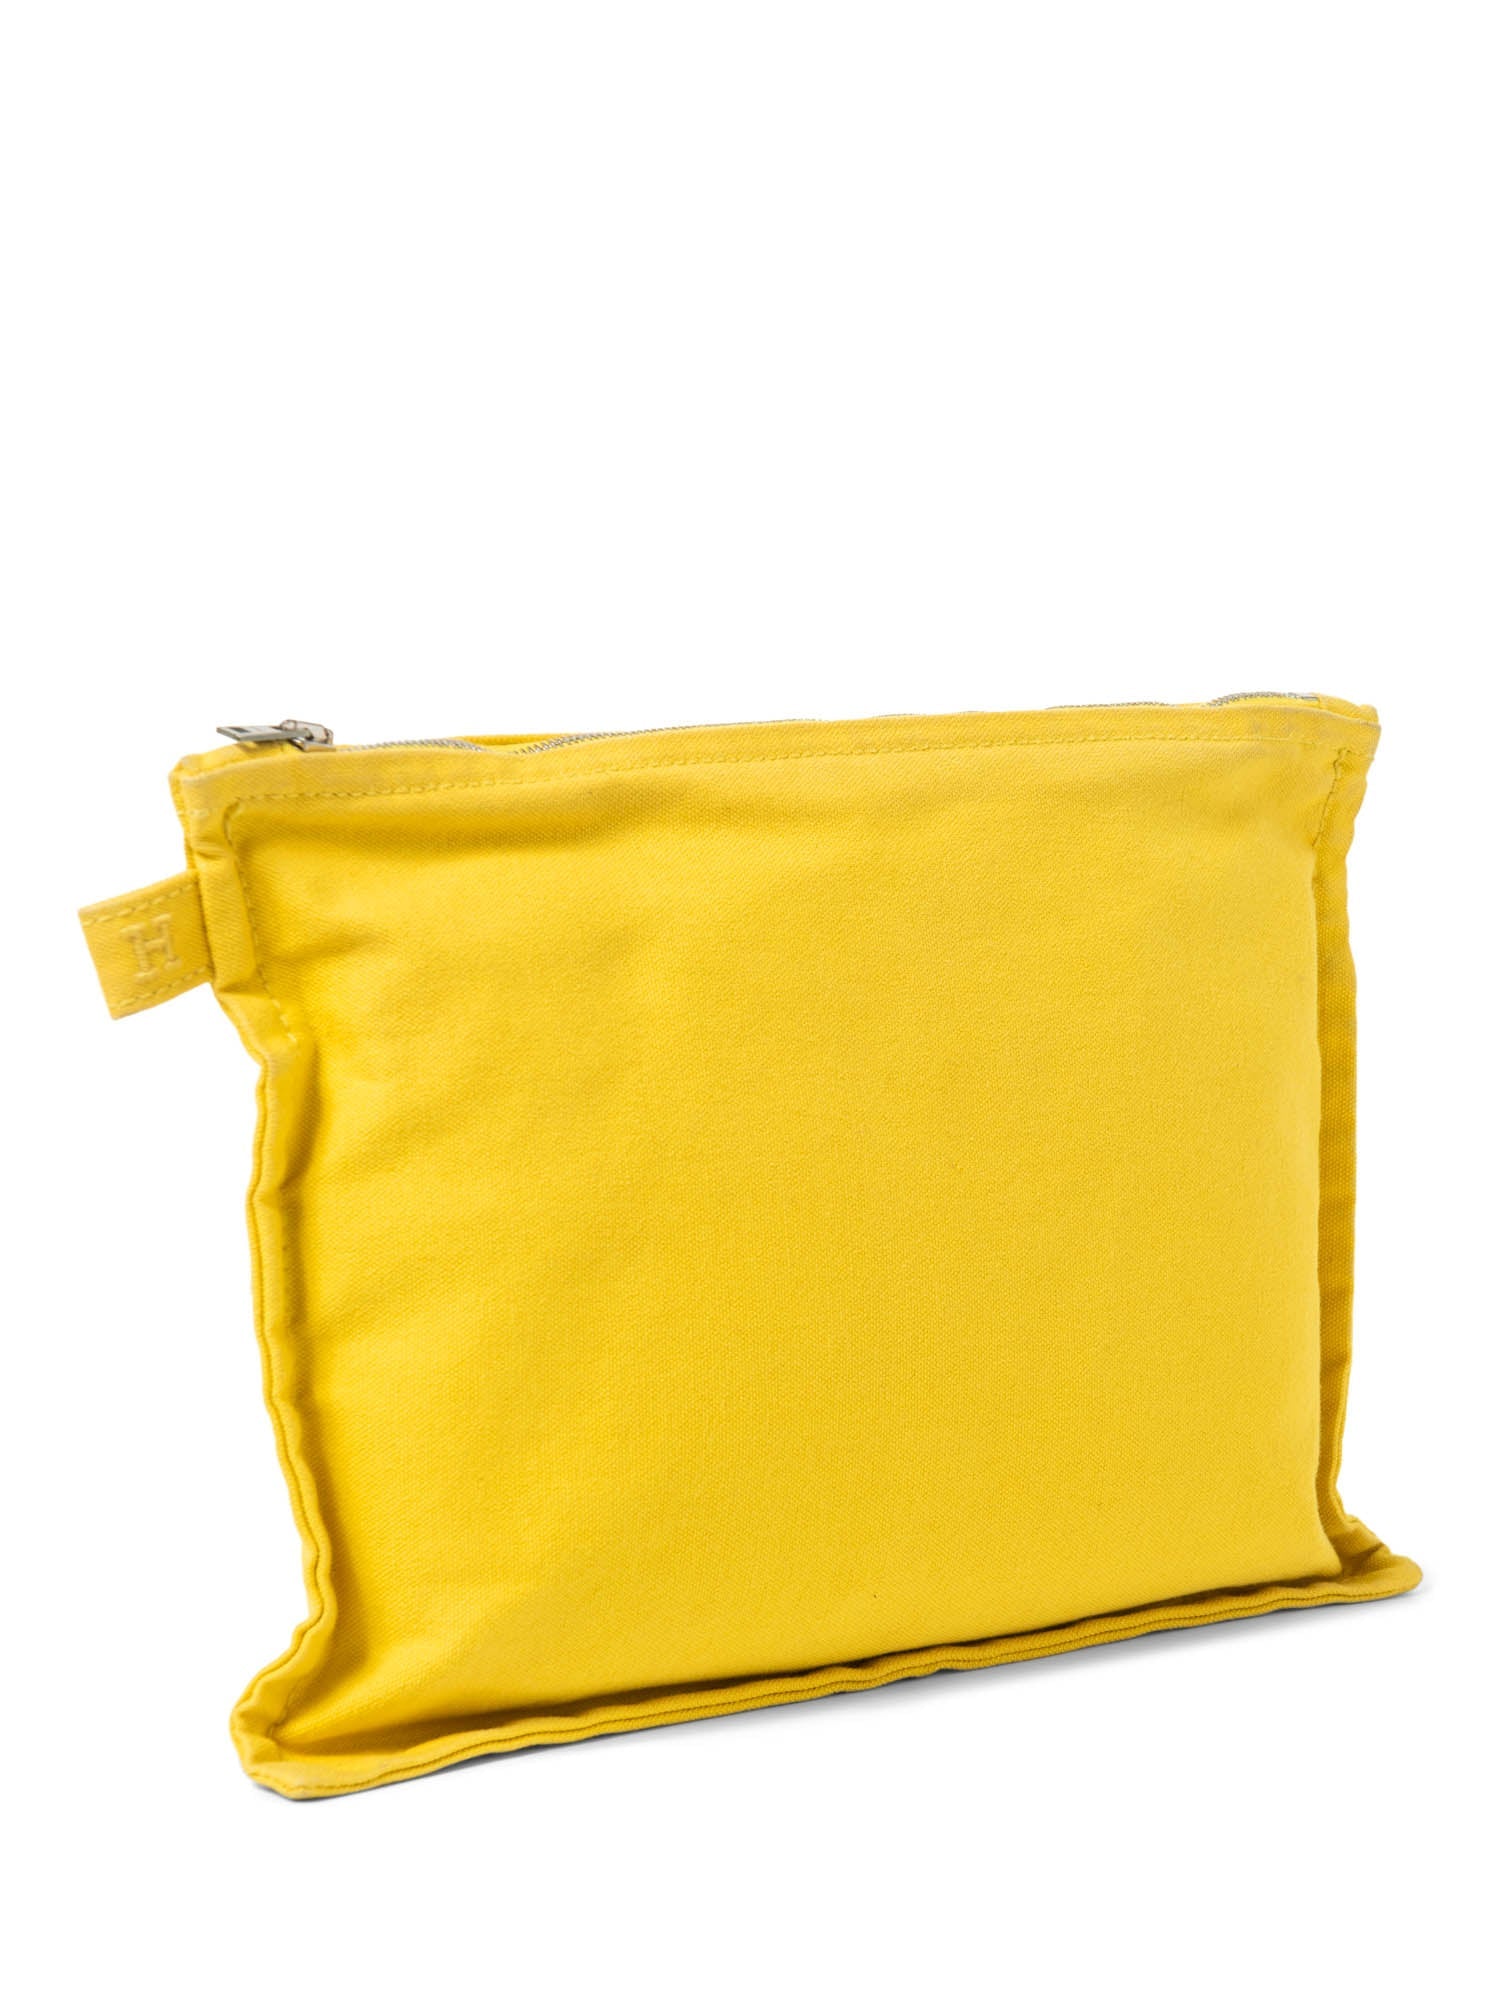 The Birkin Bag Is Jane Birkin's Style Legacy—This Is How to Buy One | Hermes  bag birkin, Birkin bag, Hermes birkin